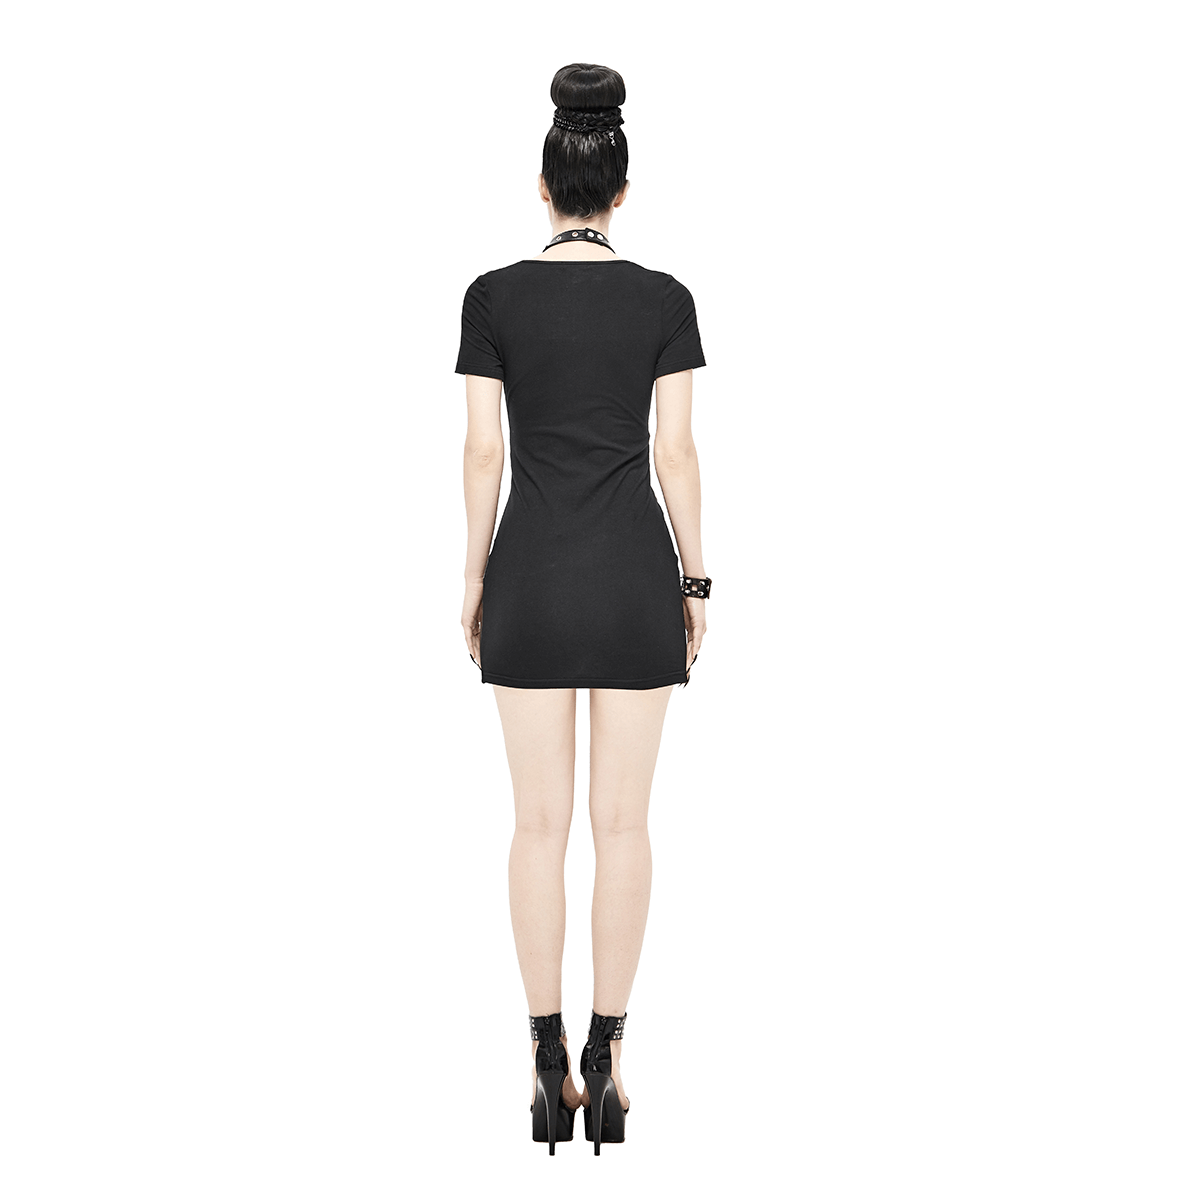 Gothic Women's Mini Dress with Choker Belt / Sexy Skinny Black Dress with Five-Point Star - HARD'N'HEAVY